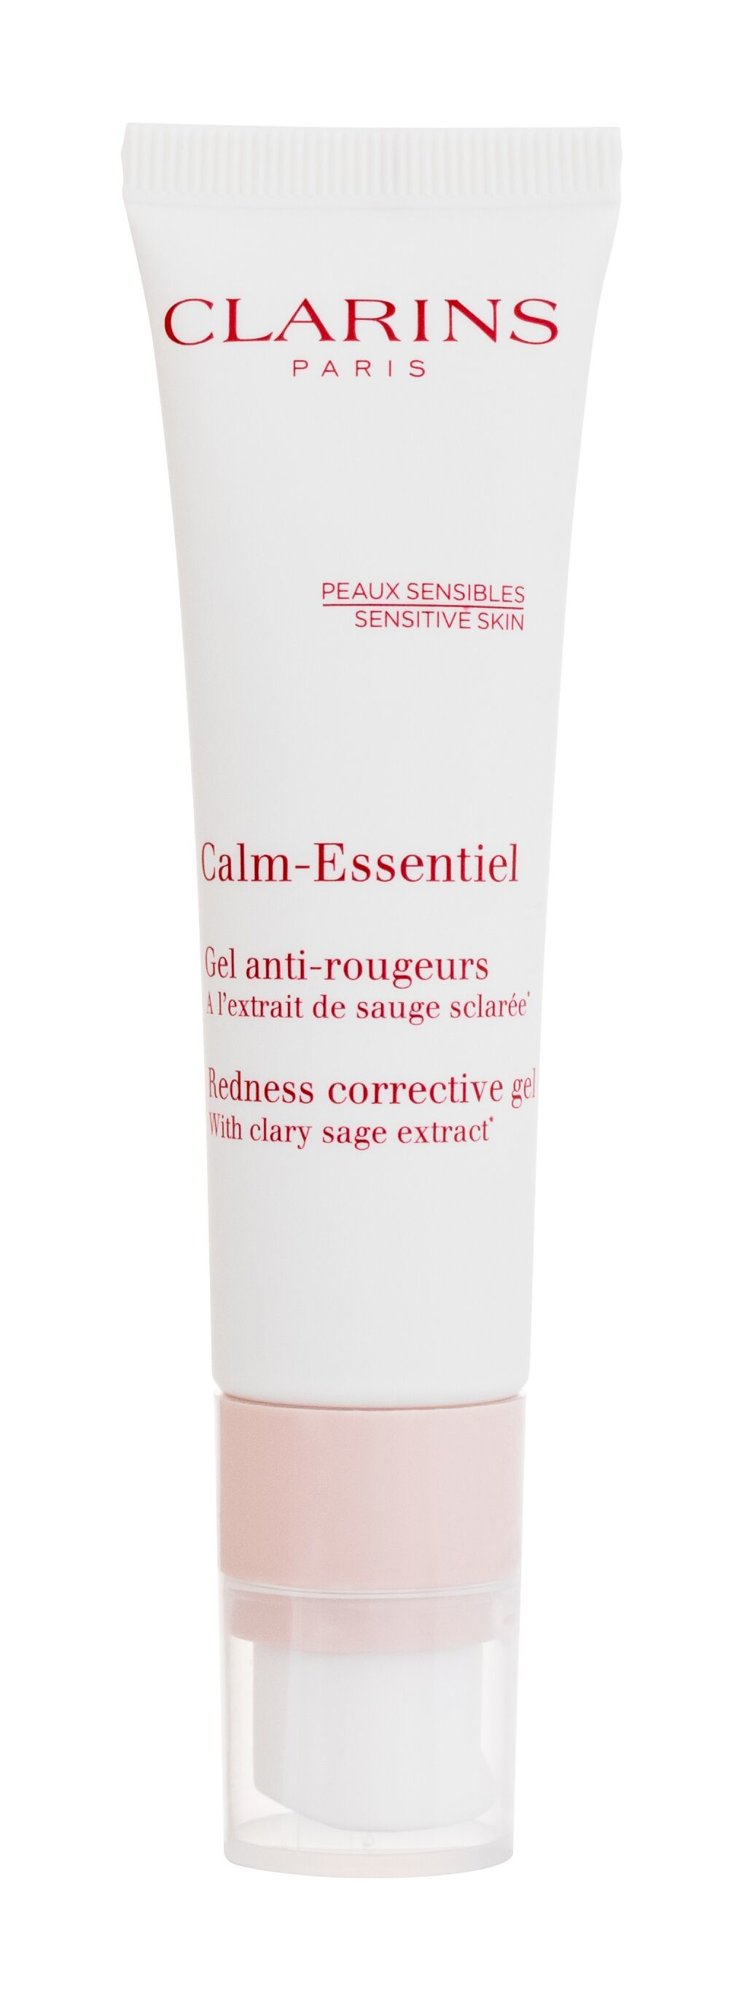 Clarins Calm-Essentiel Redness Corrective Gel 30ml veido gelis